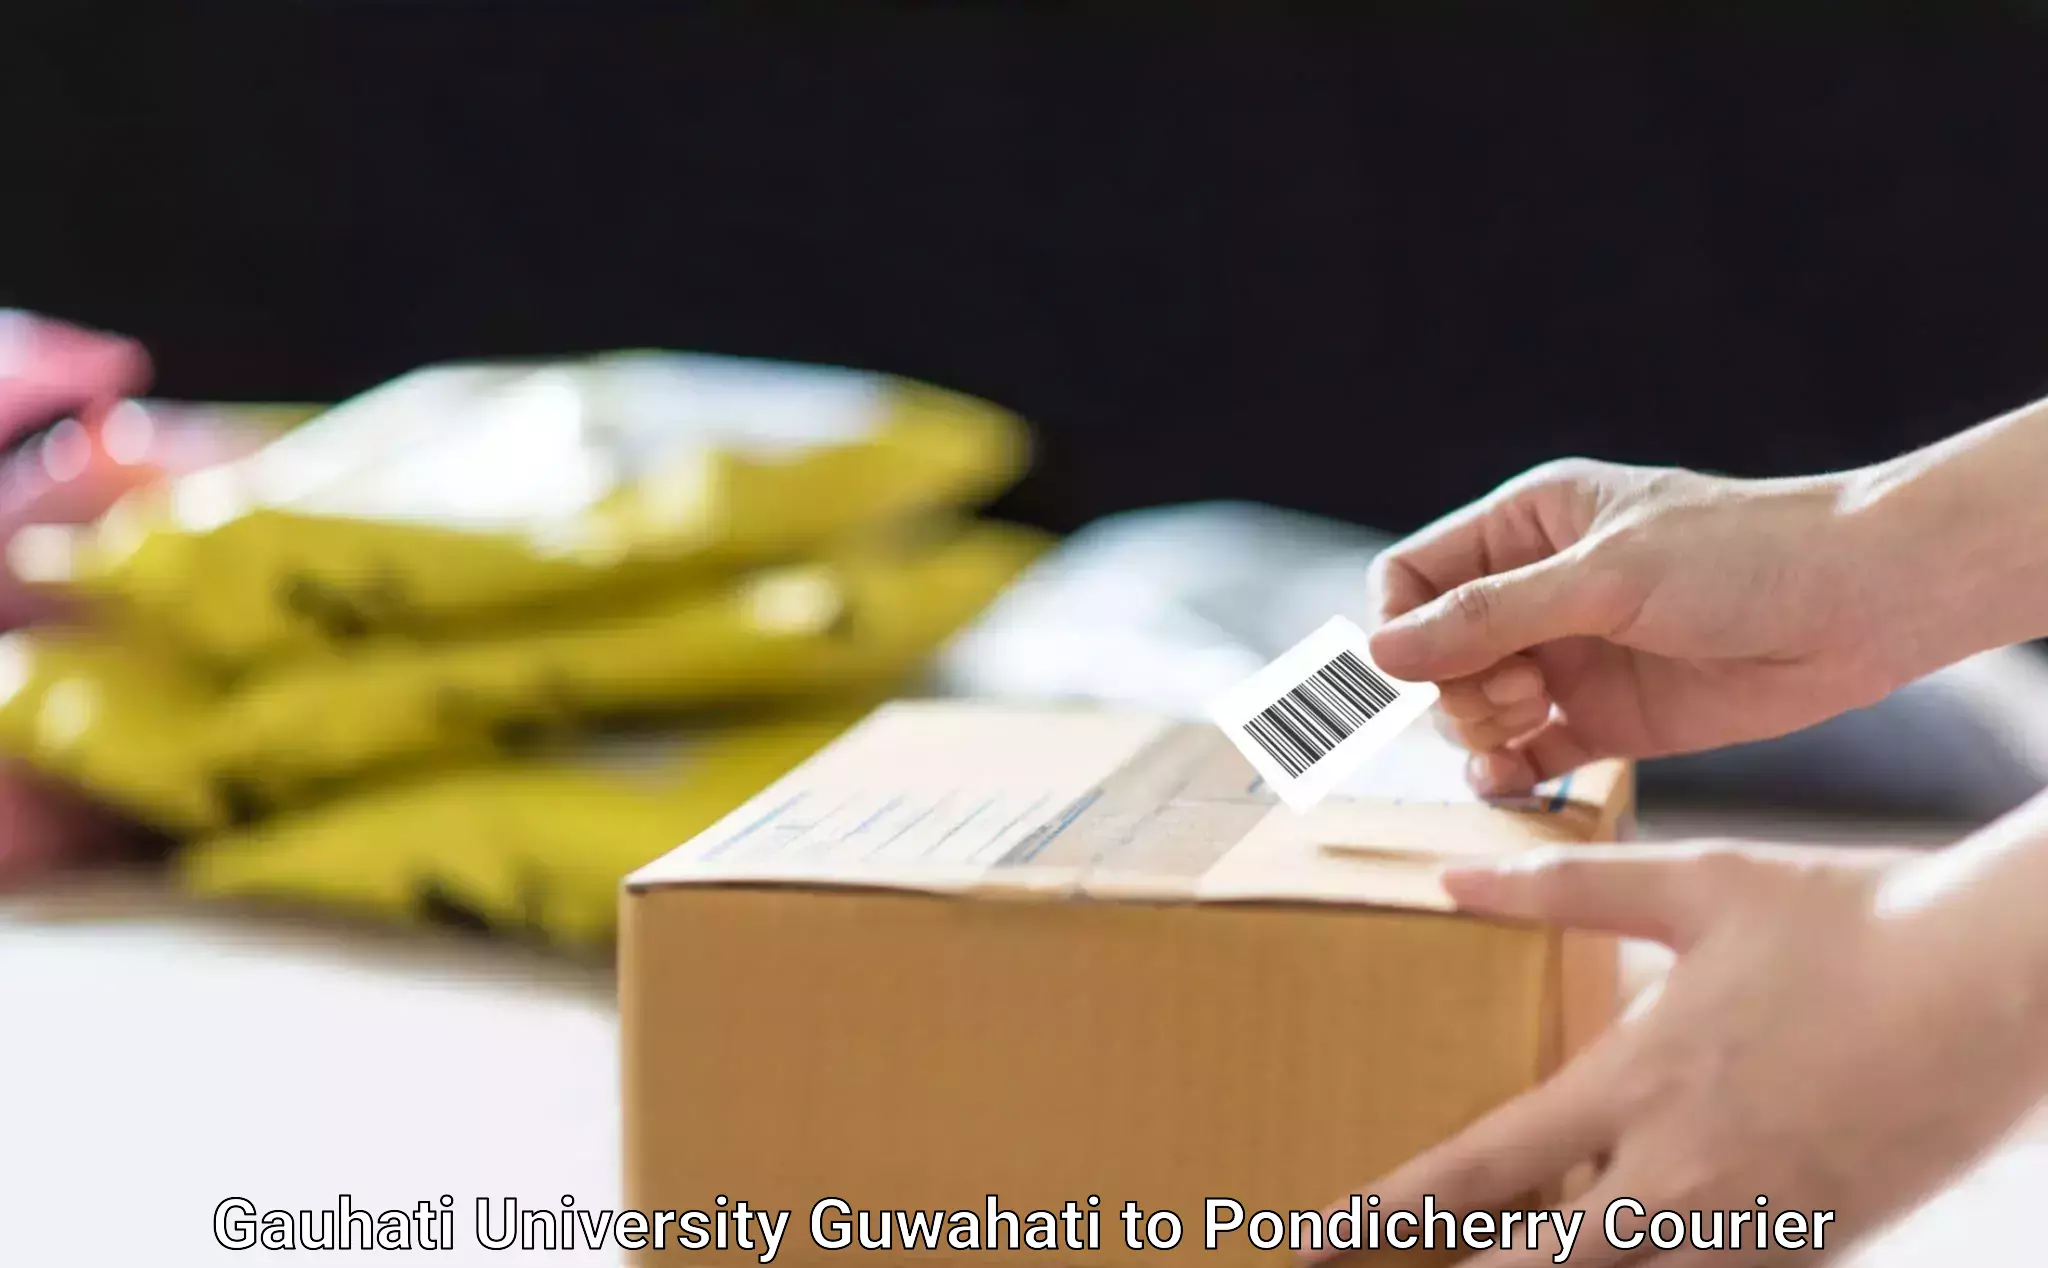 Quality courier partnerships Gauhati University Guwahati to Karaikal